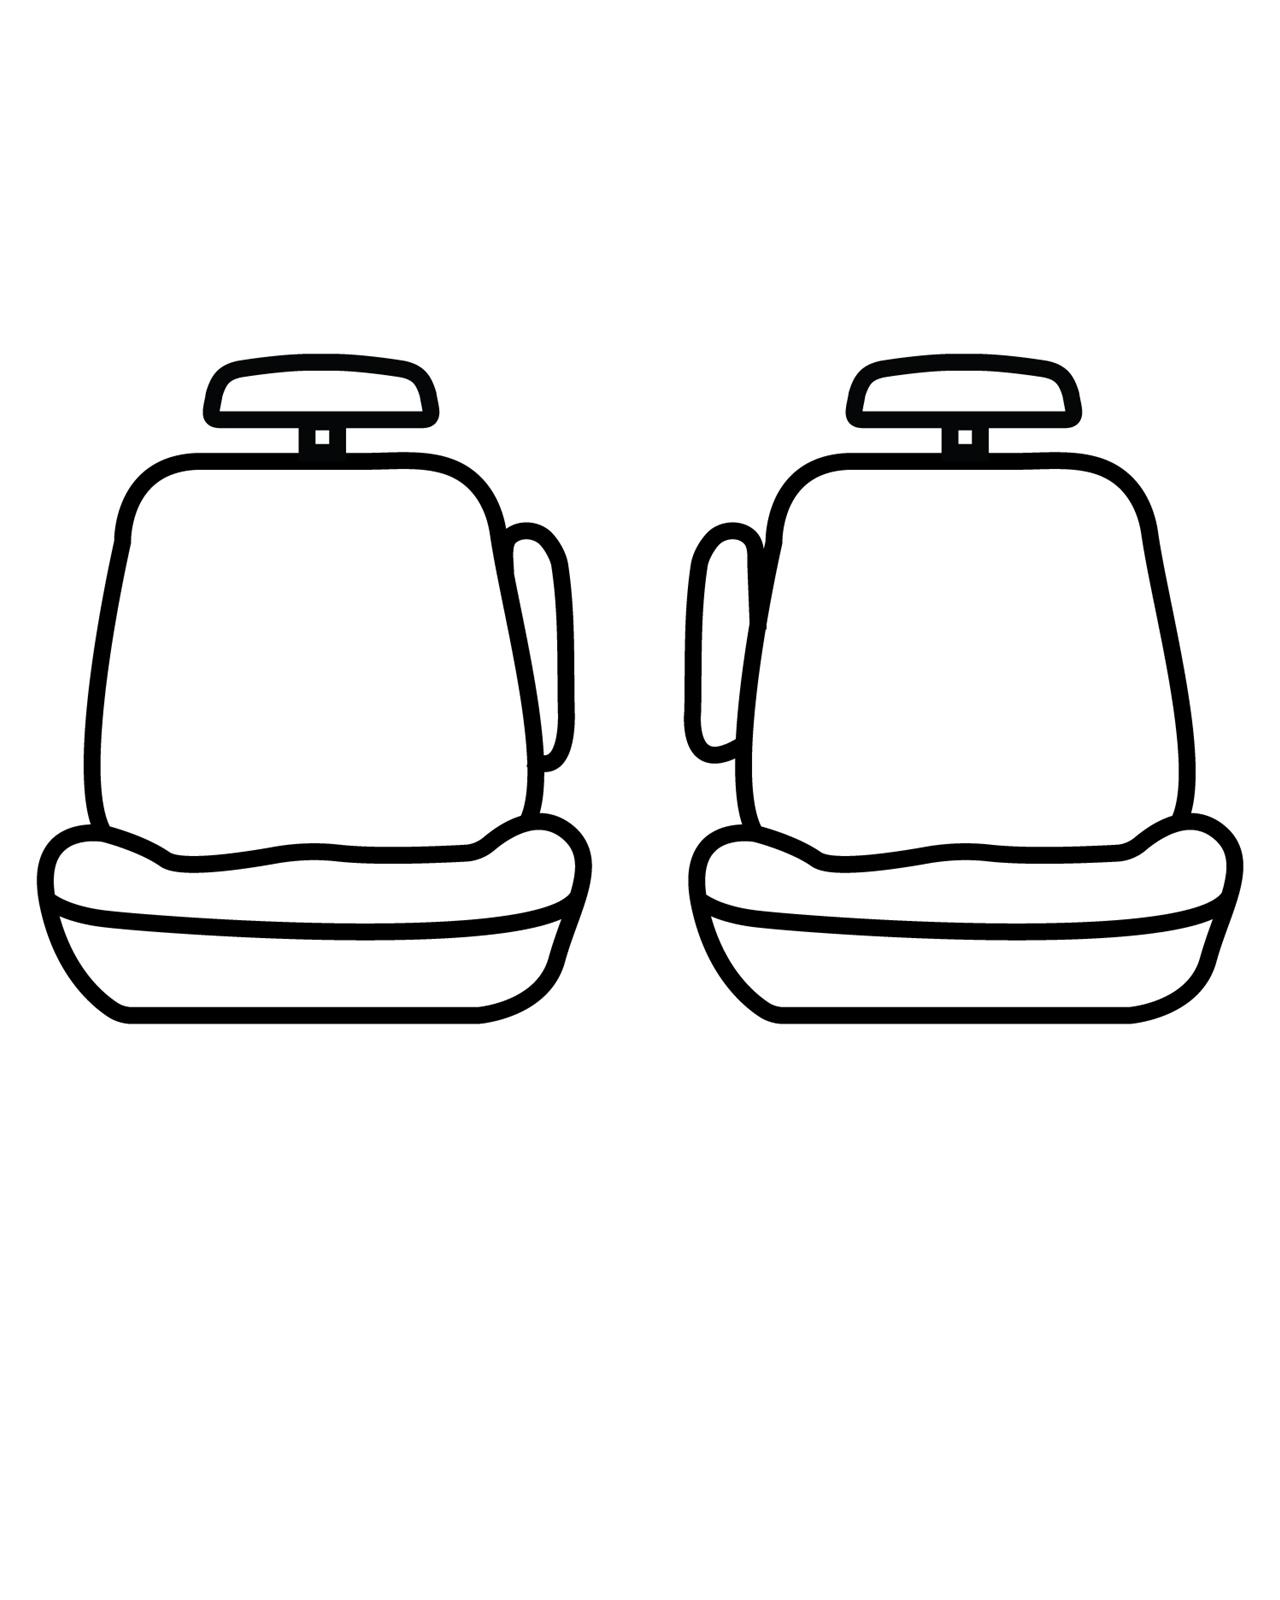 Carhartt Precision Fit Custom Seat Covers - Covercraft